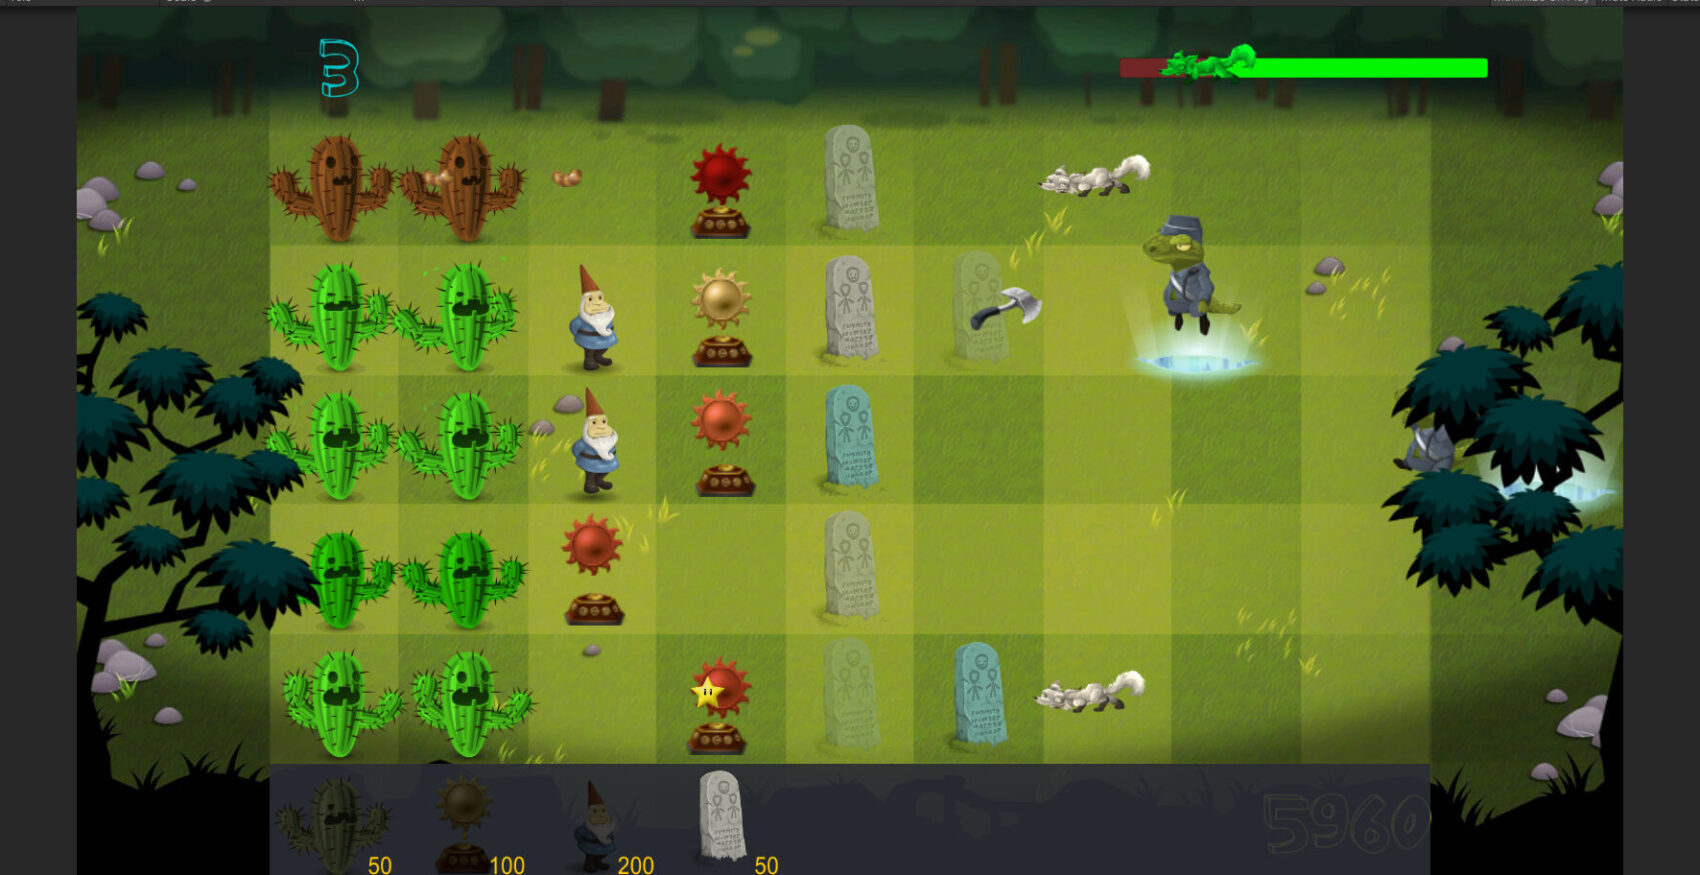 A prototype garden defender game